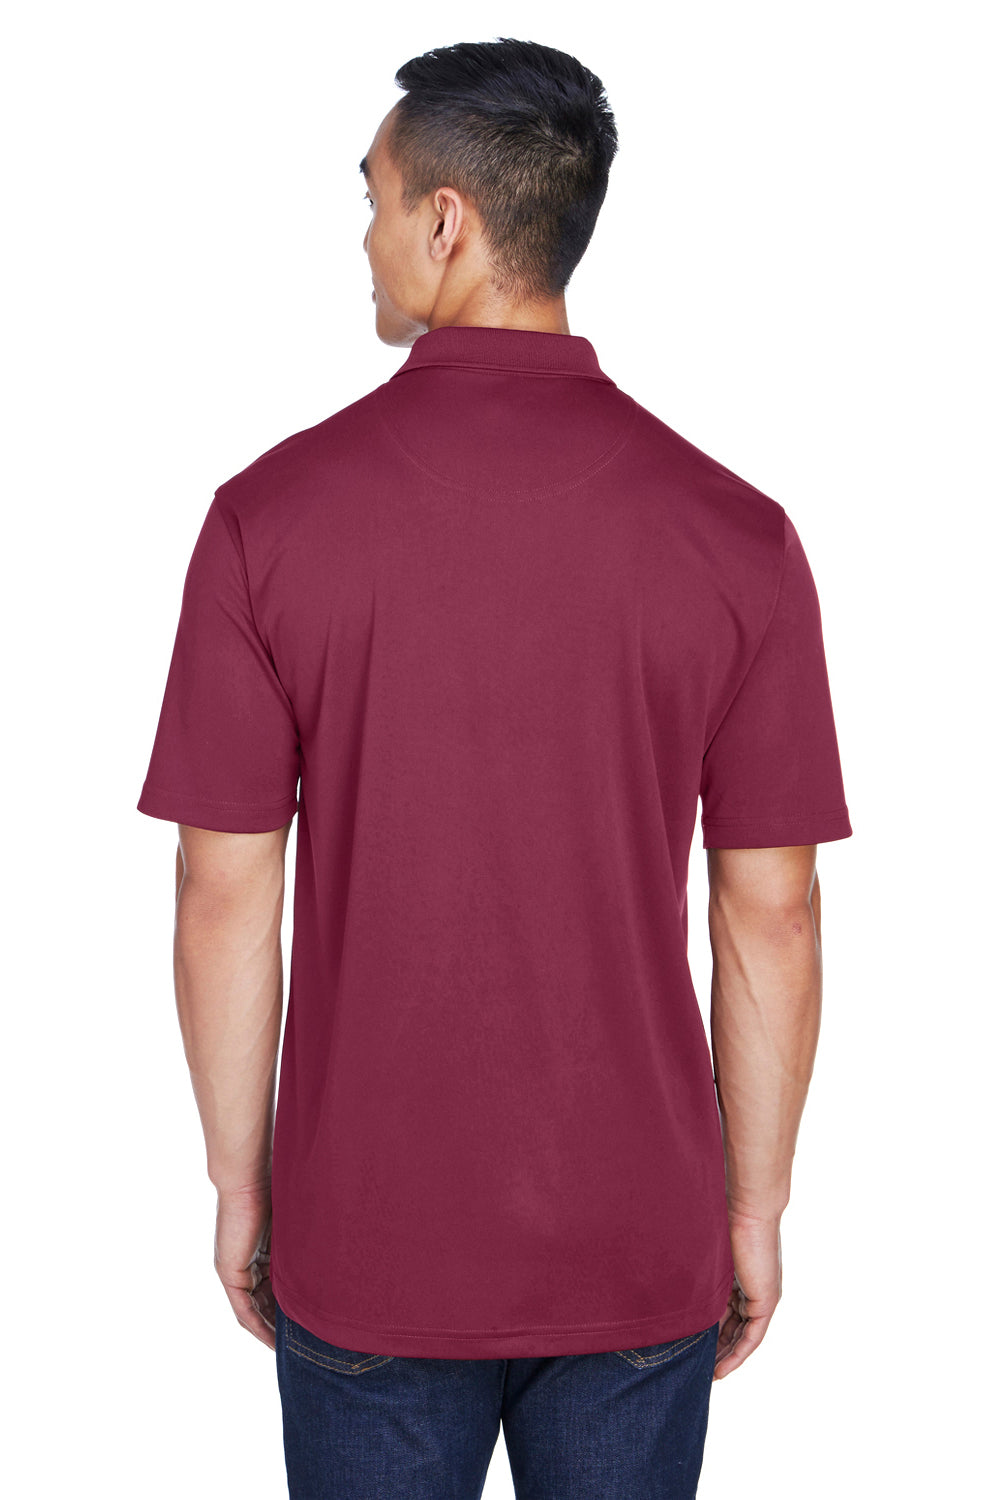 UltraClub 8405 Mens Cool & Dry Moisture Wicking Short Sleeve Polo Shirt Maroon Back